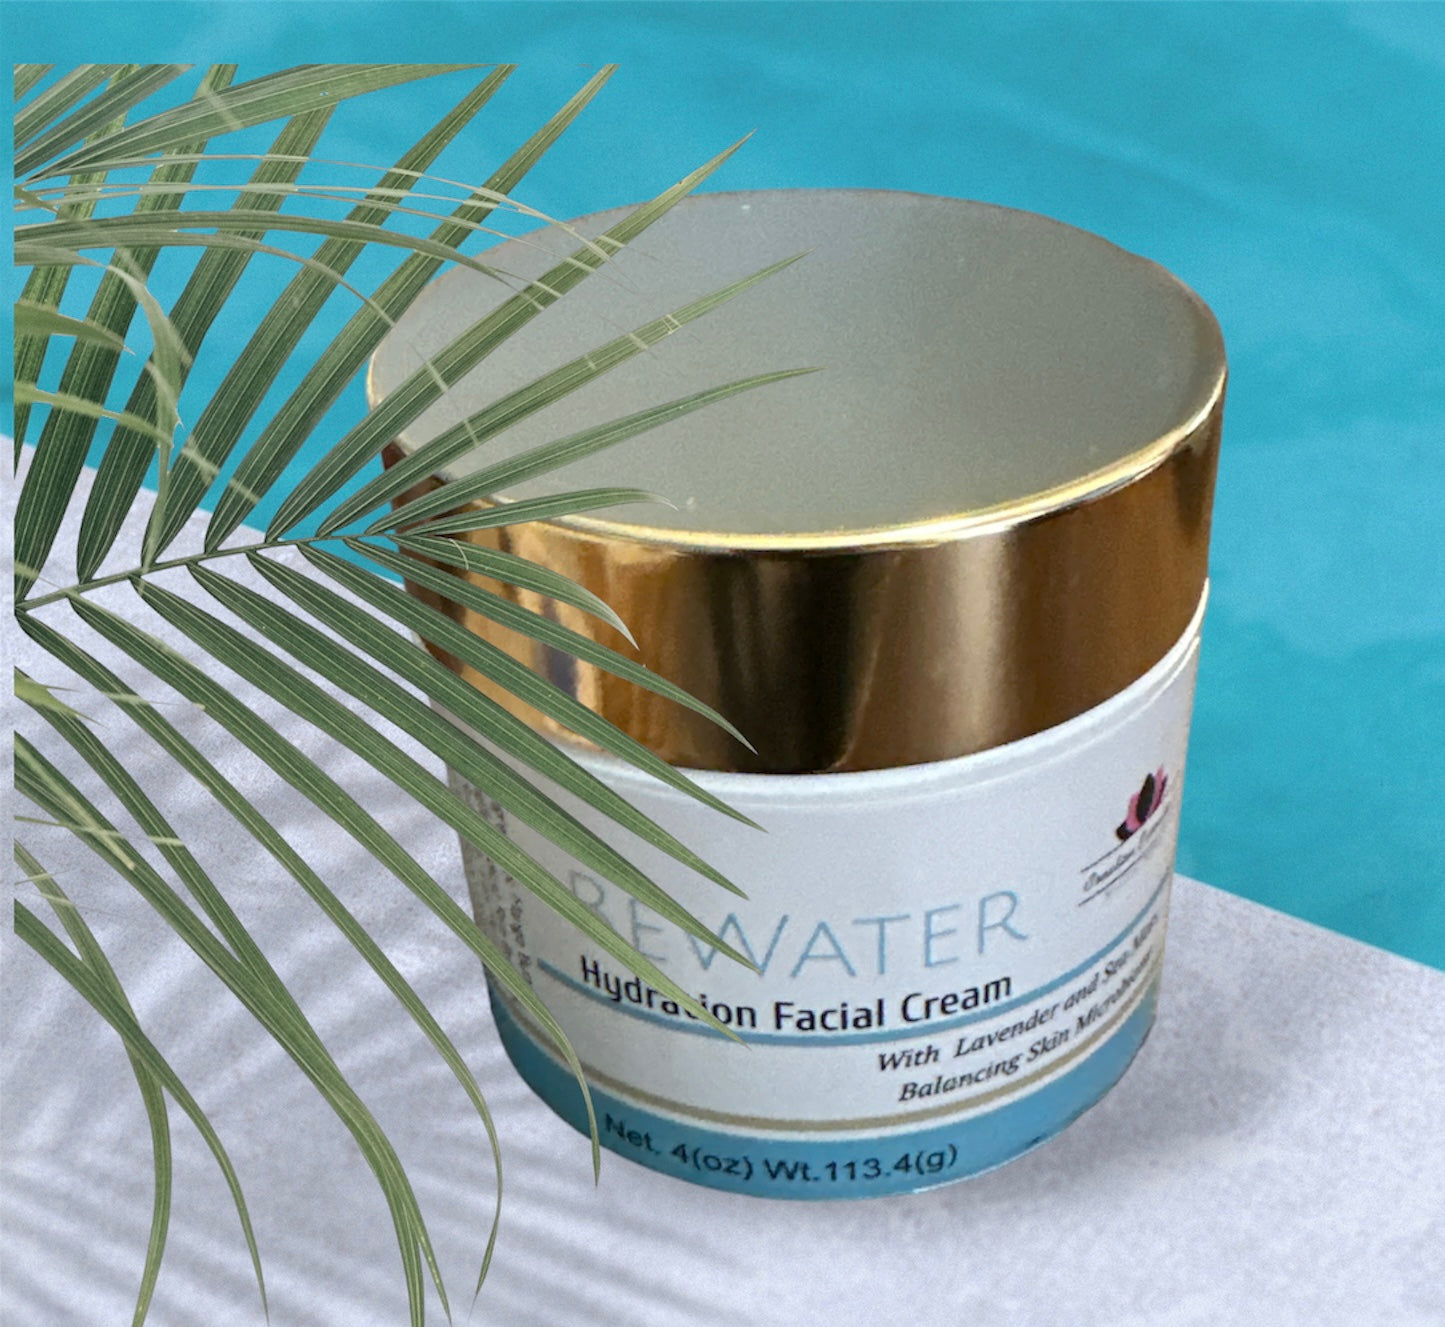 BeWater Hydrating Facial Cream w/Sea Moss